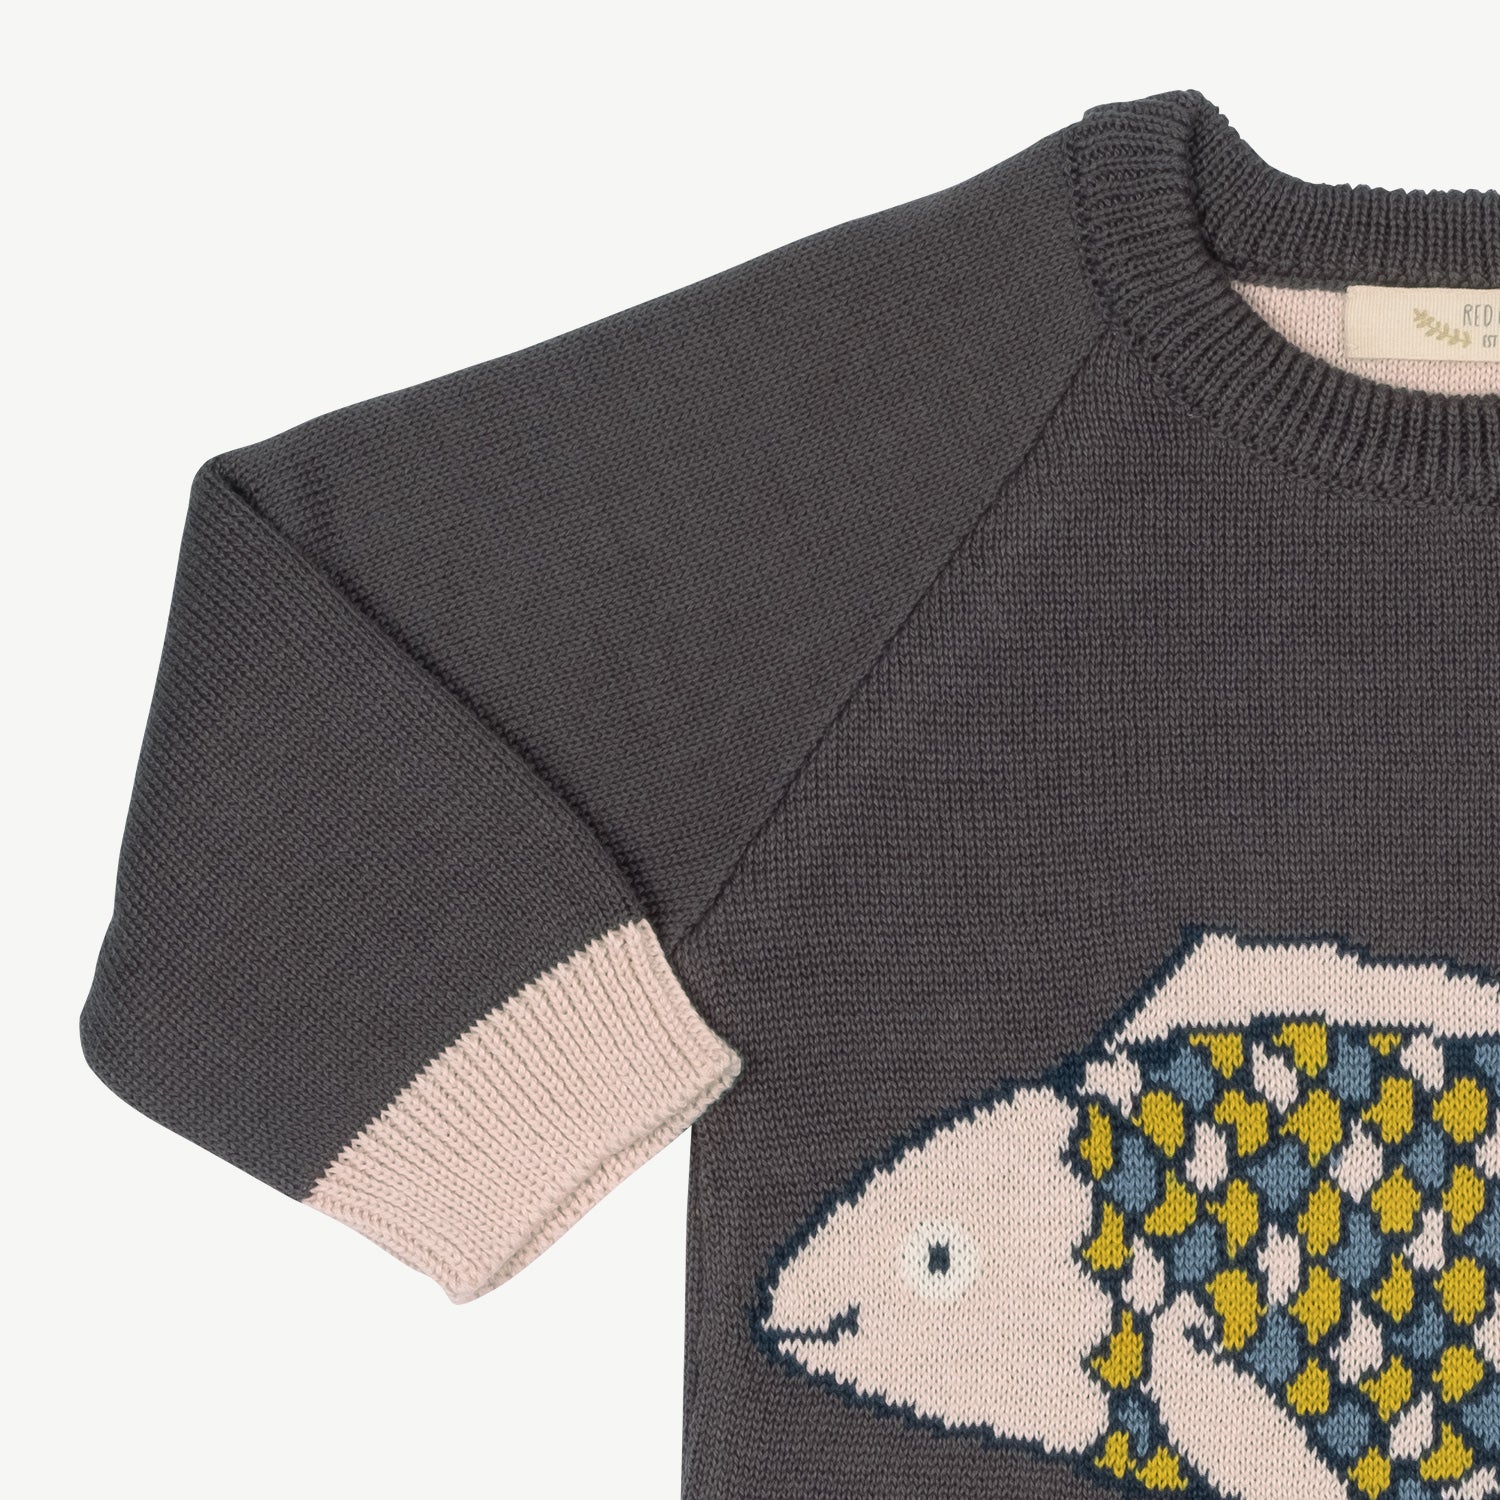 'eleanor (parrotfish)' raven knit pullover